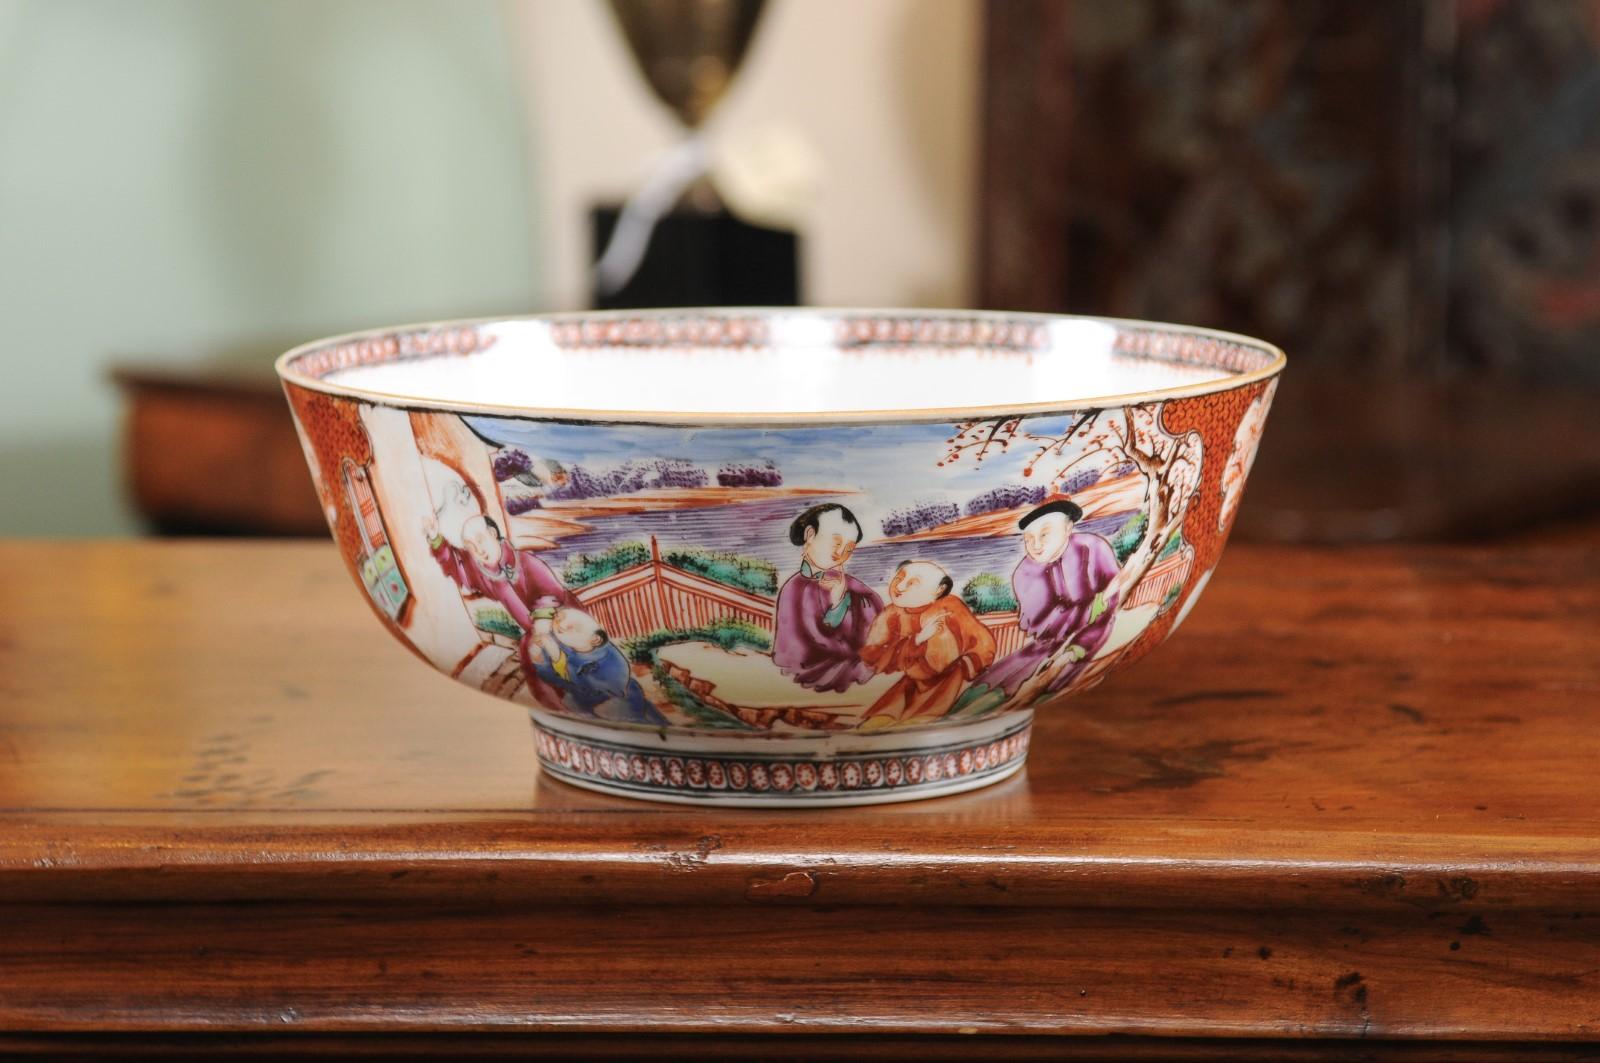 18th century Chinese Export porcelain bowl with Mandarin scene & burnt orange ground.